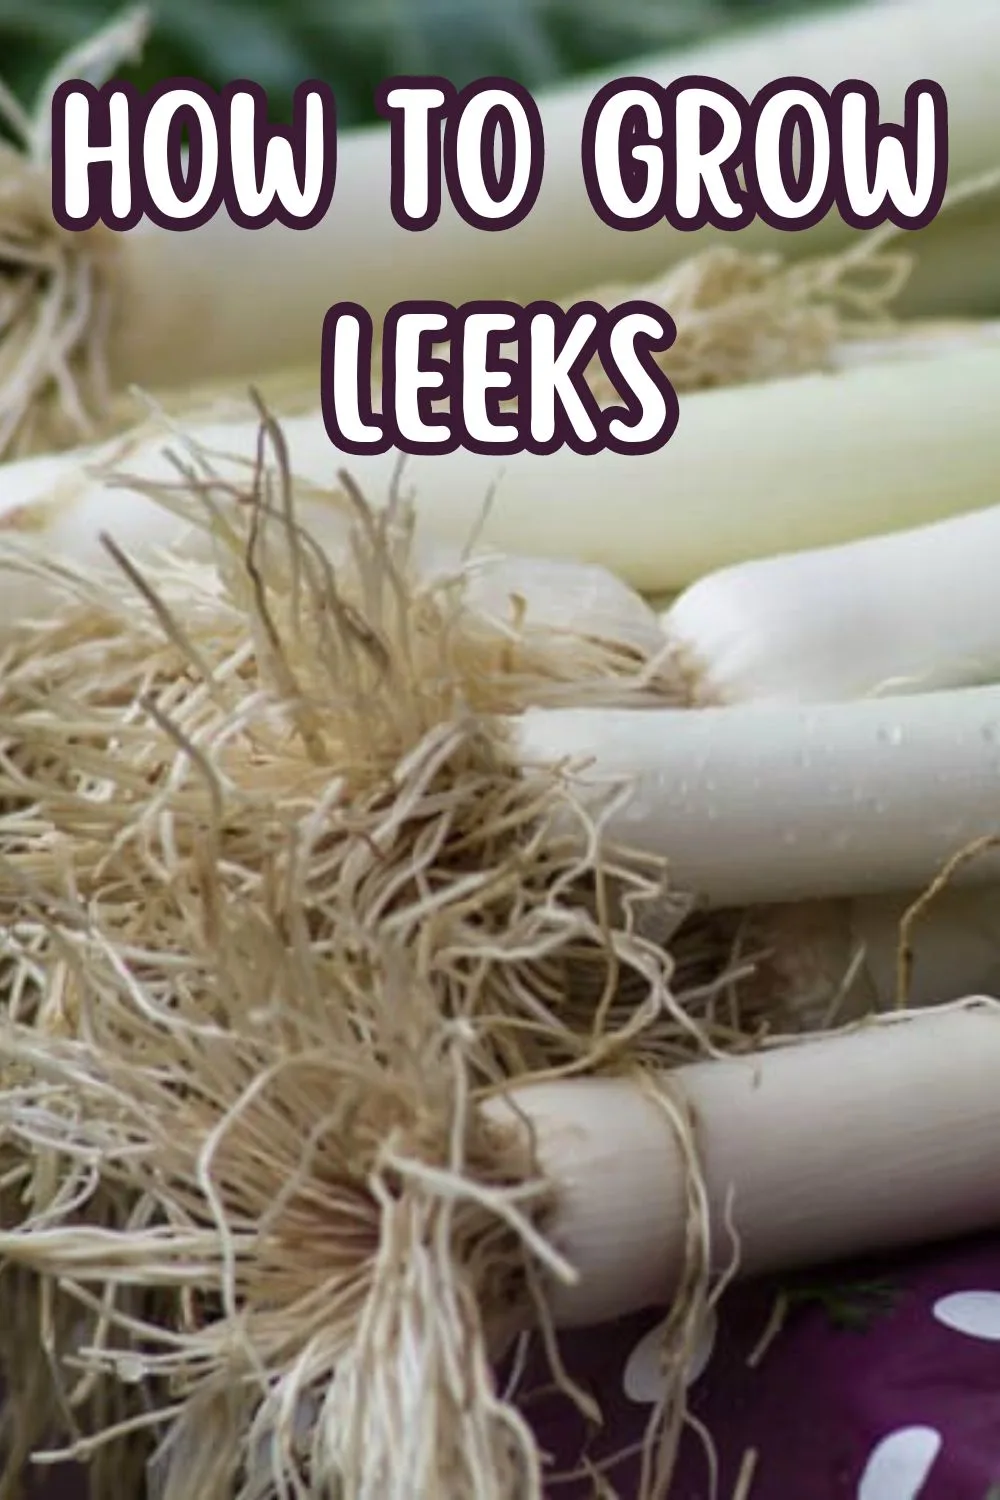 How to grow leeks.